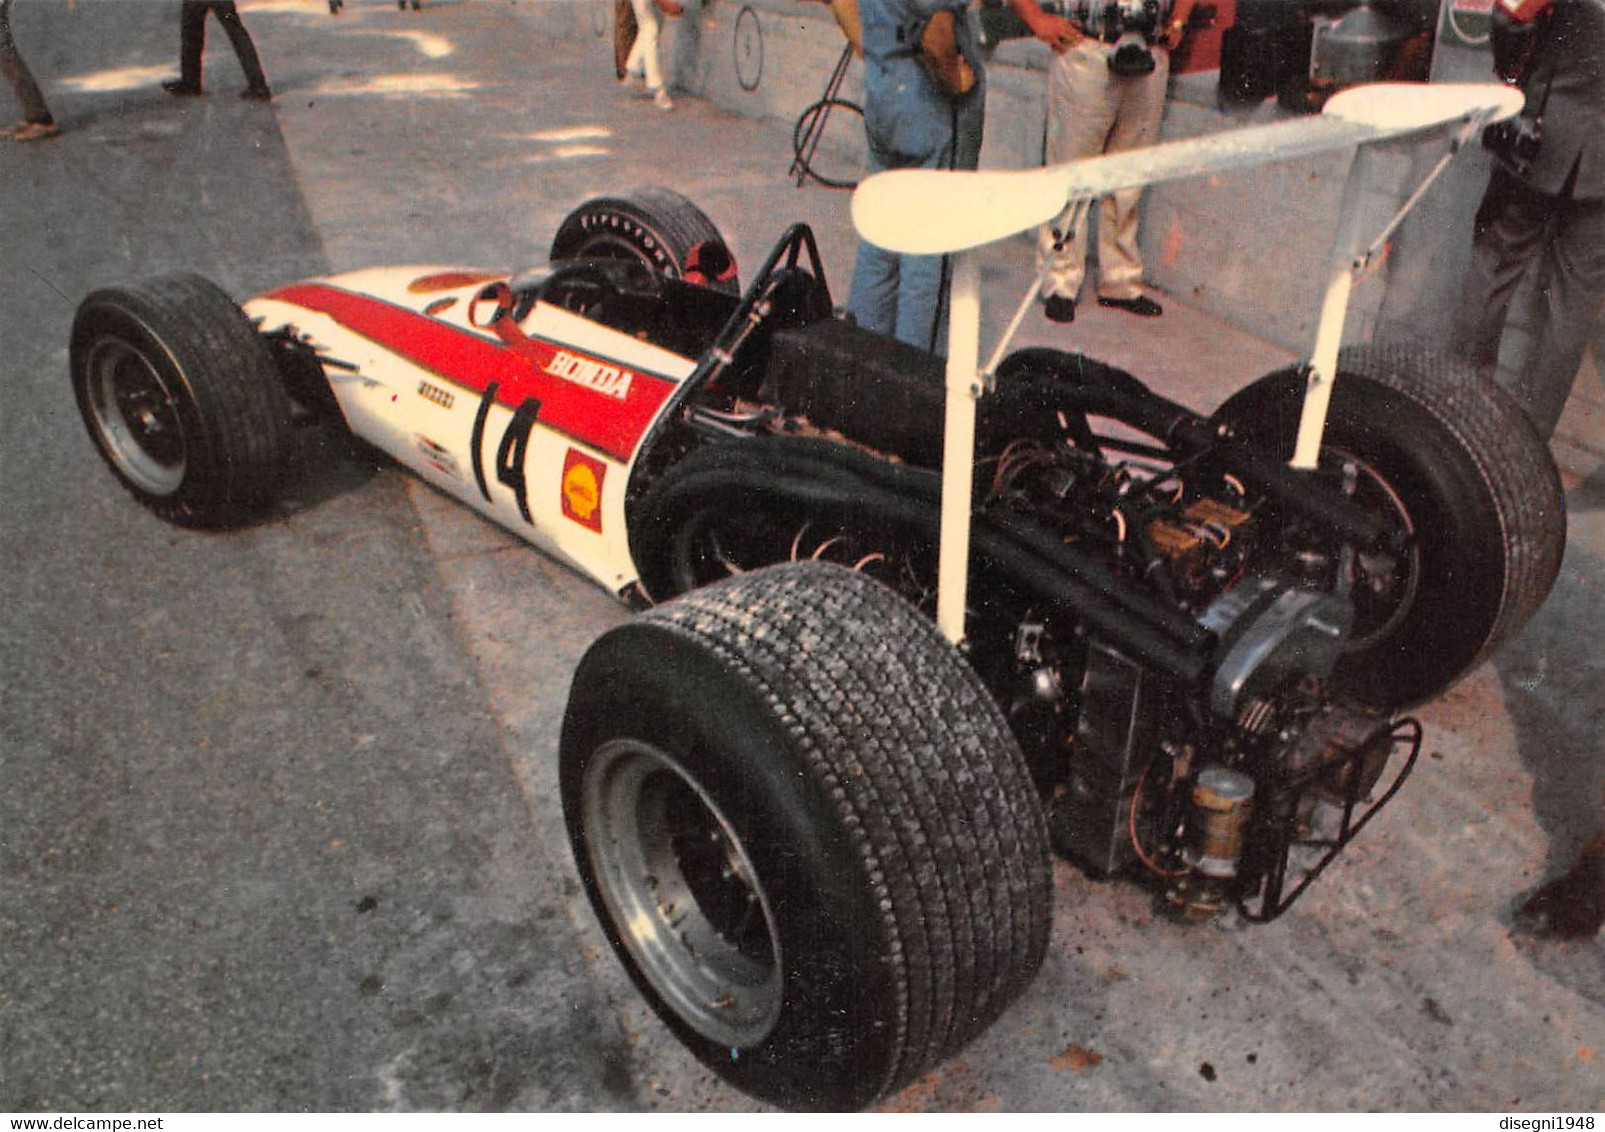 011005 " JOHN SURTEES - HONDA F. 1 1968 - GRAN PREMIO D'ITALIA 1968 - MONZA" CARTOLINA  ORIG. NON SPED. - Autosport - F1